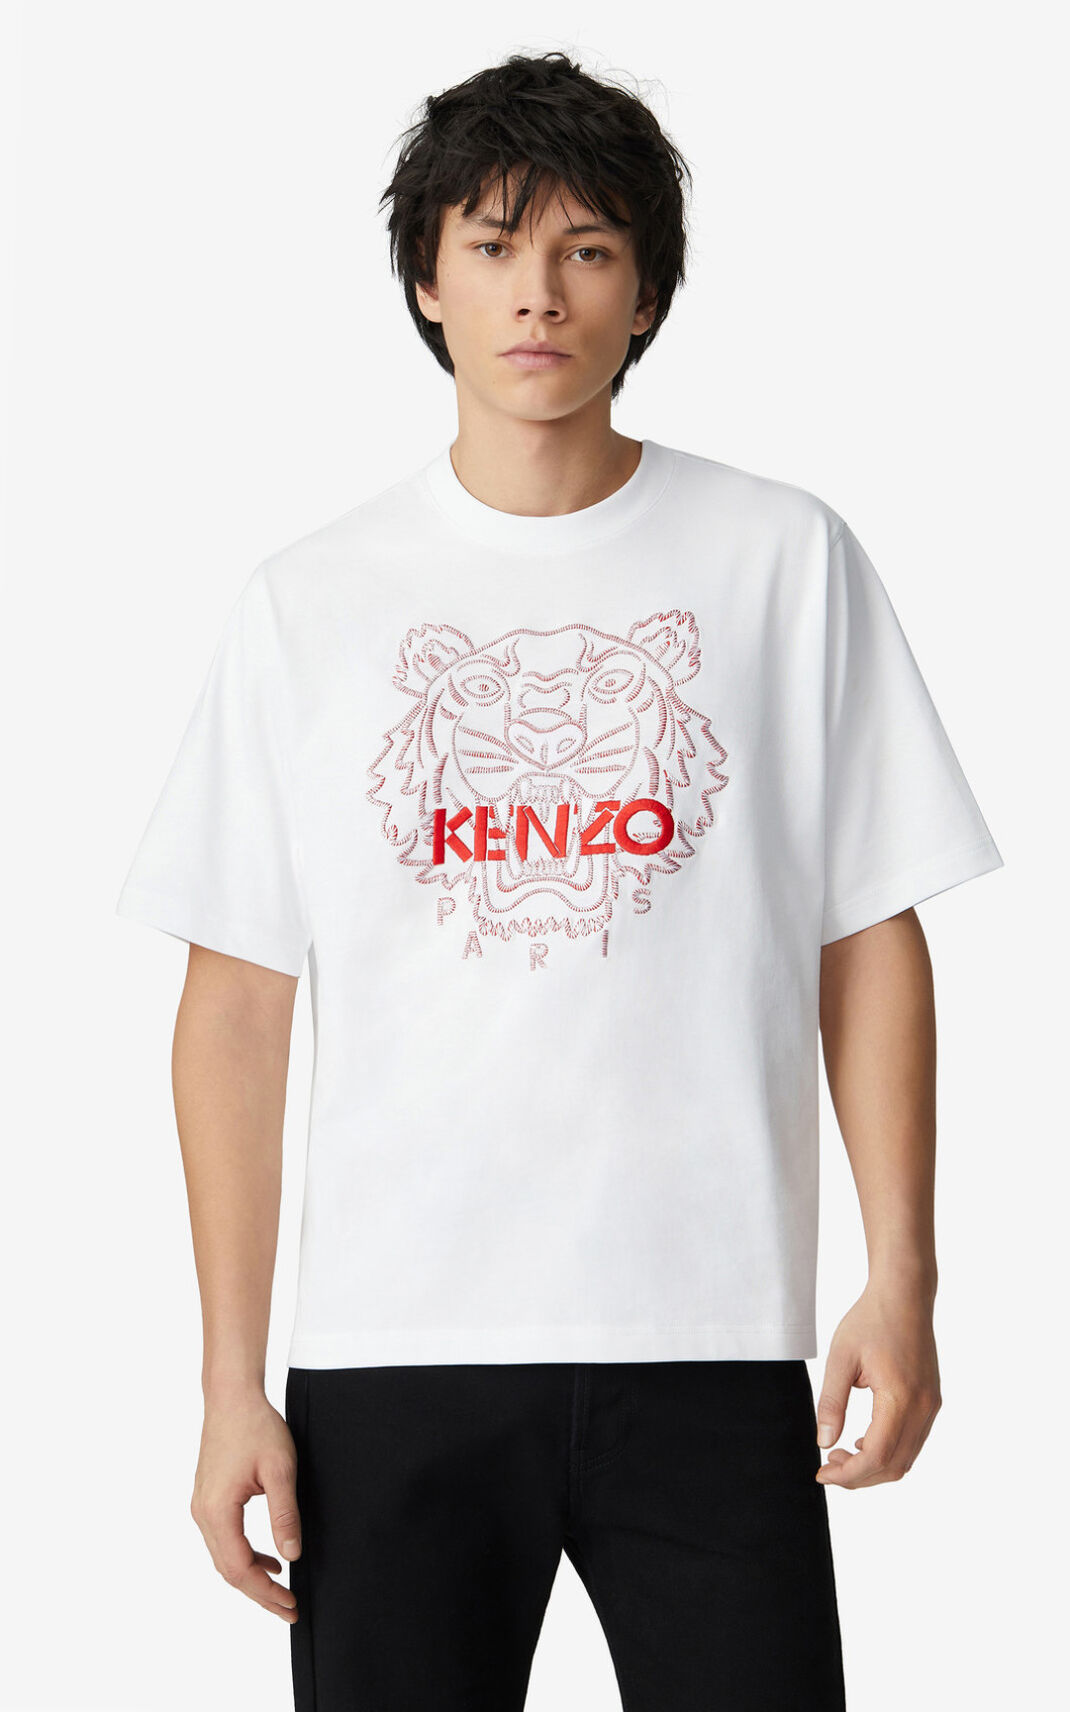 Kenzo 虎 loose fitting Tシャツ メンズ 白 - XZLKSG809